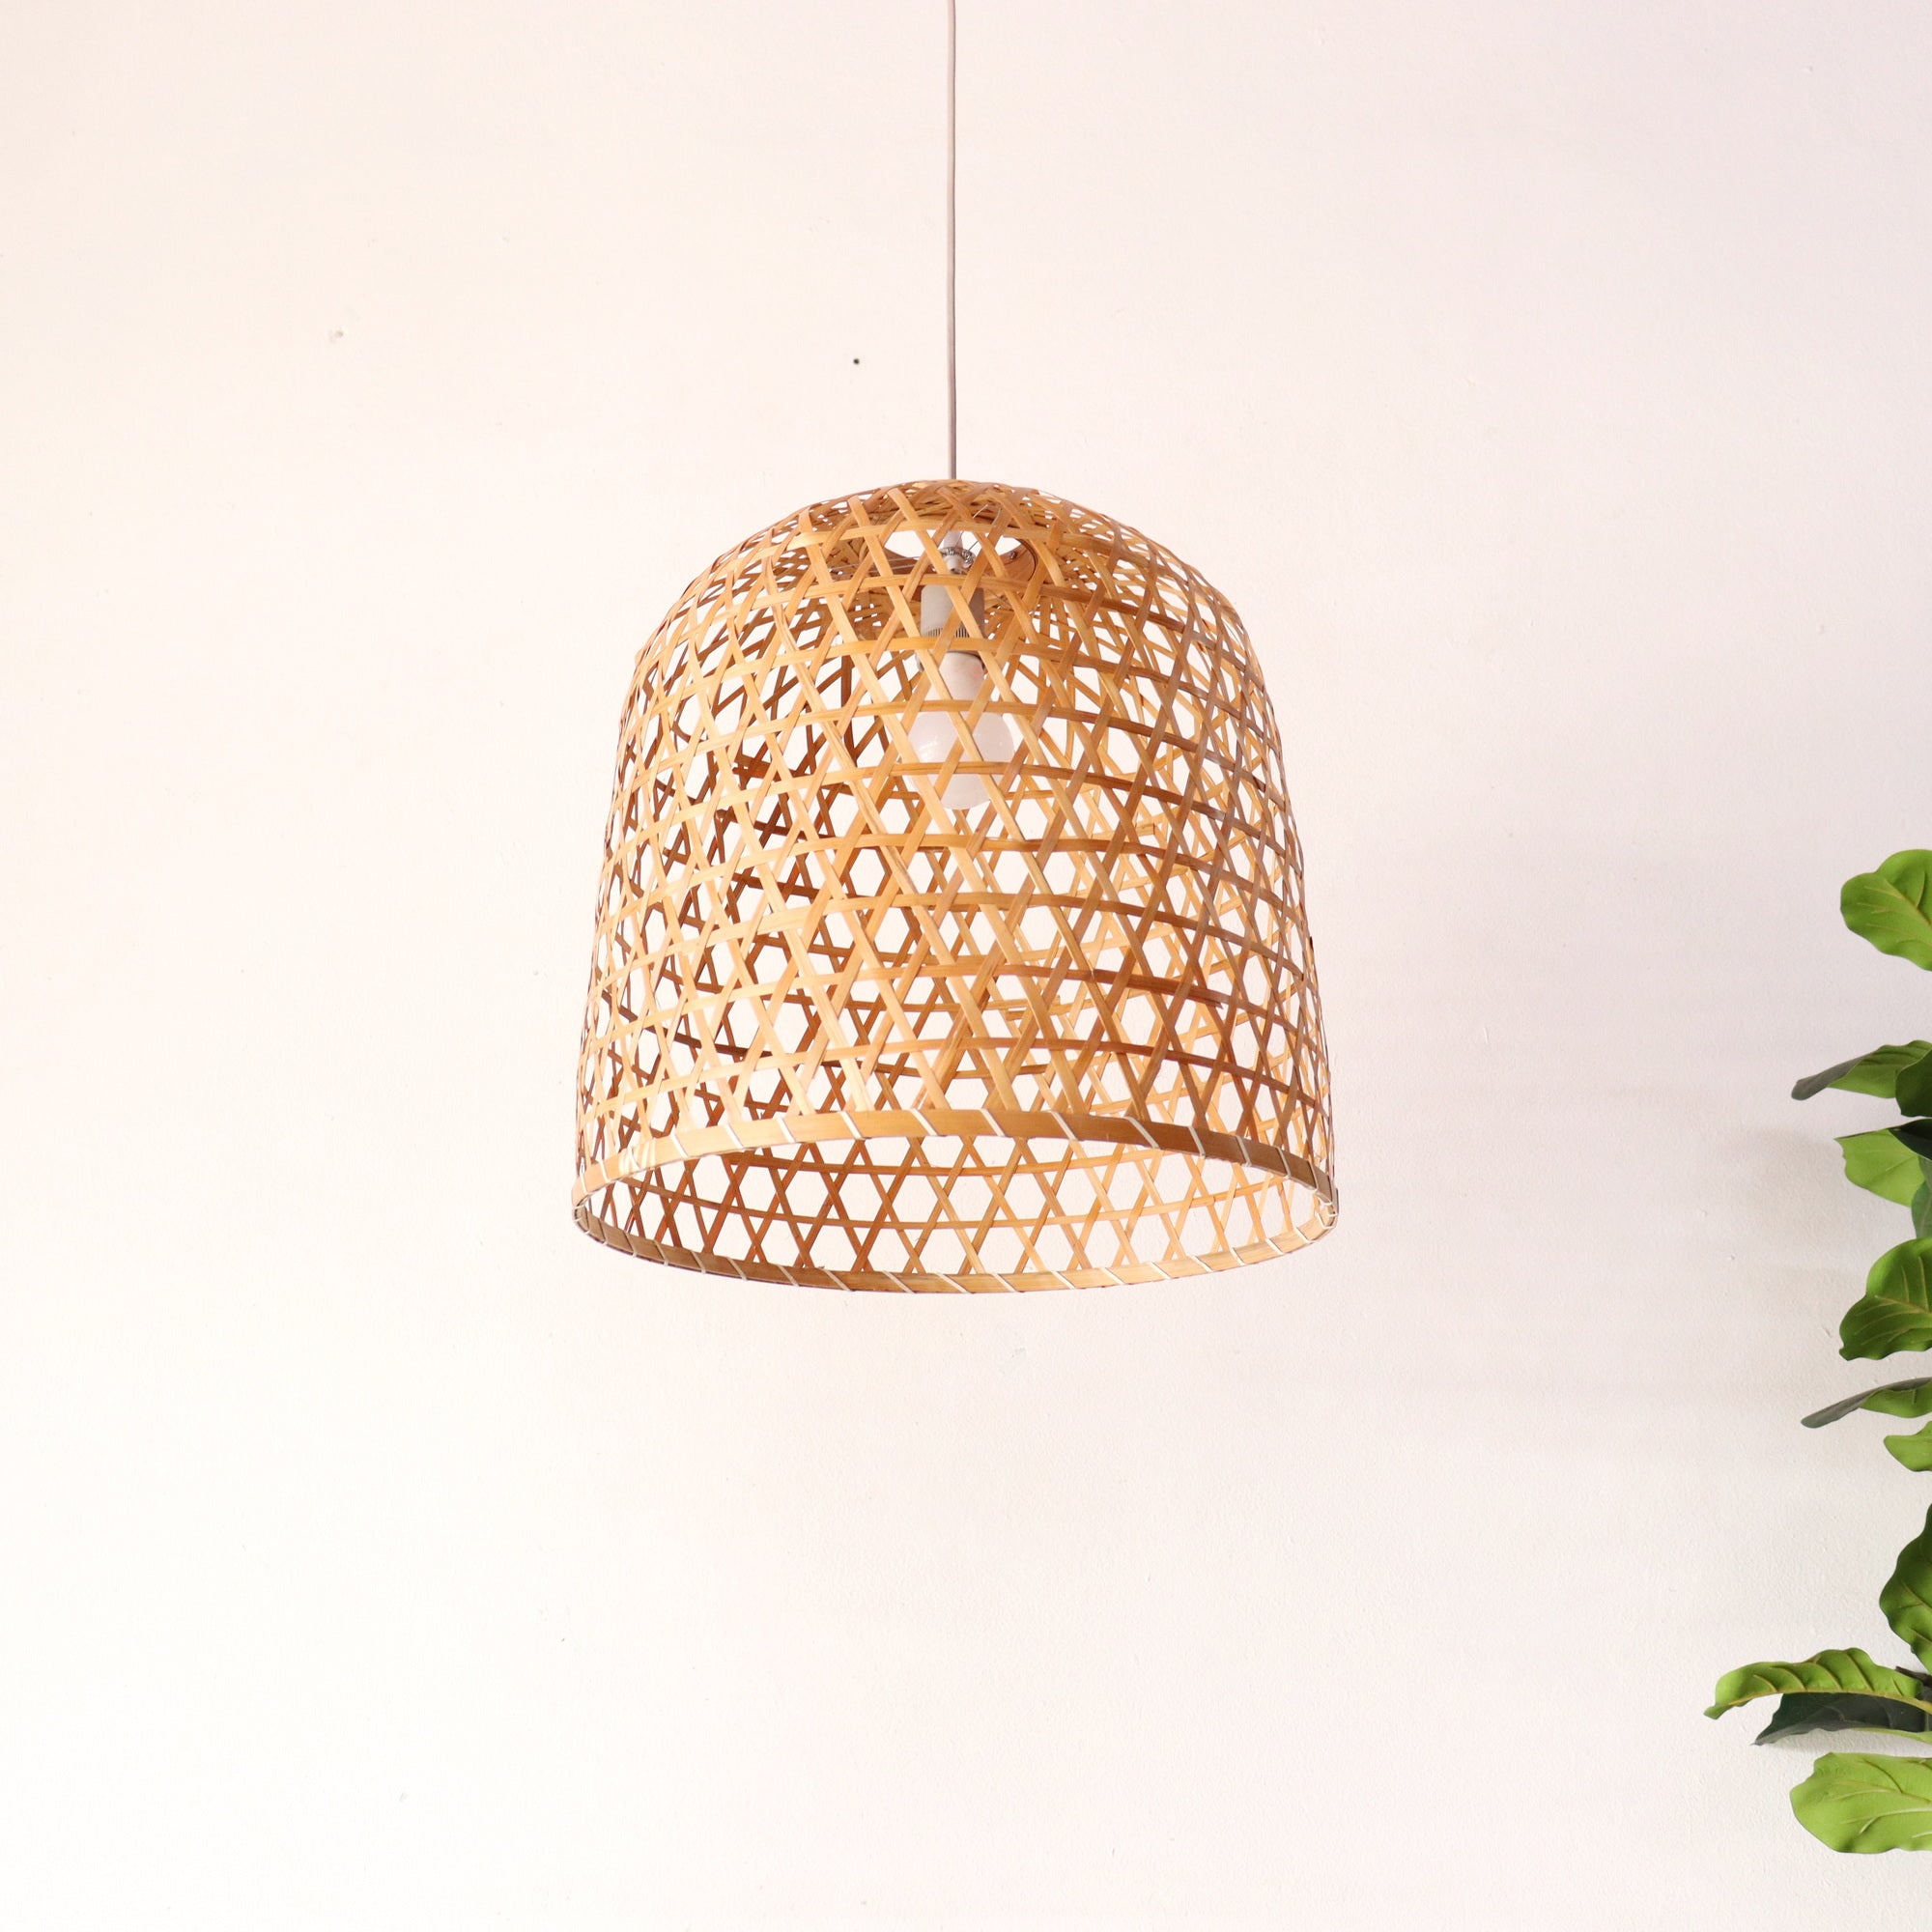 LAWAN - Lámpara colgante de bambú